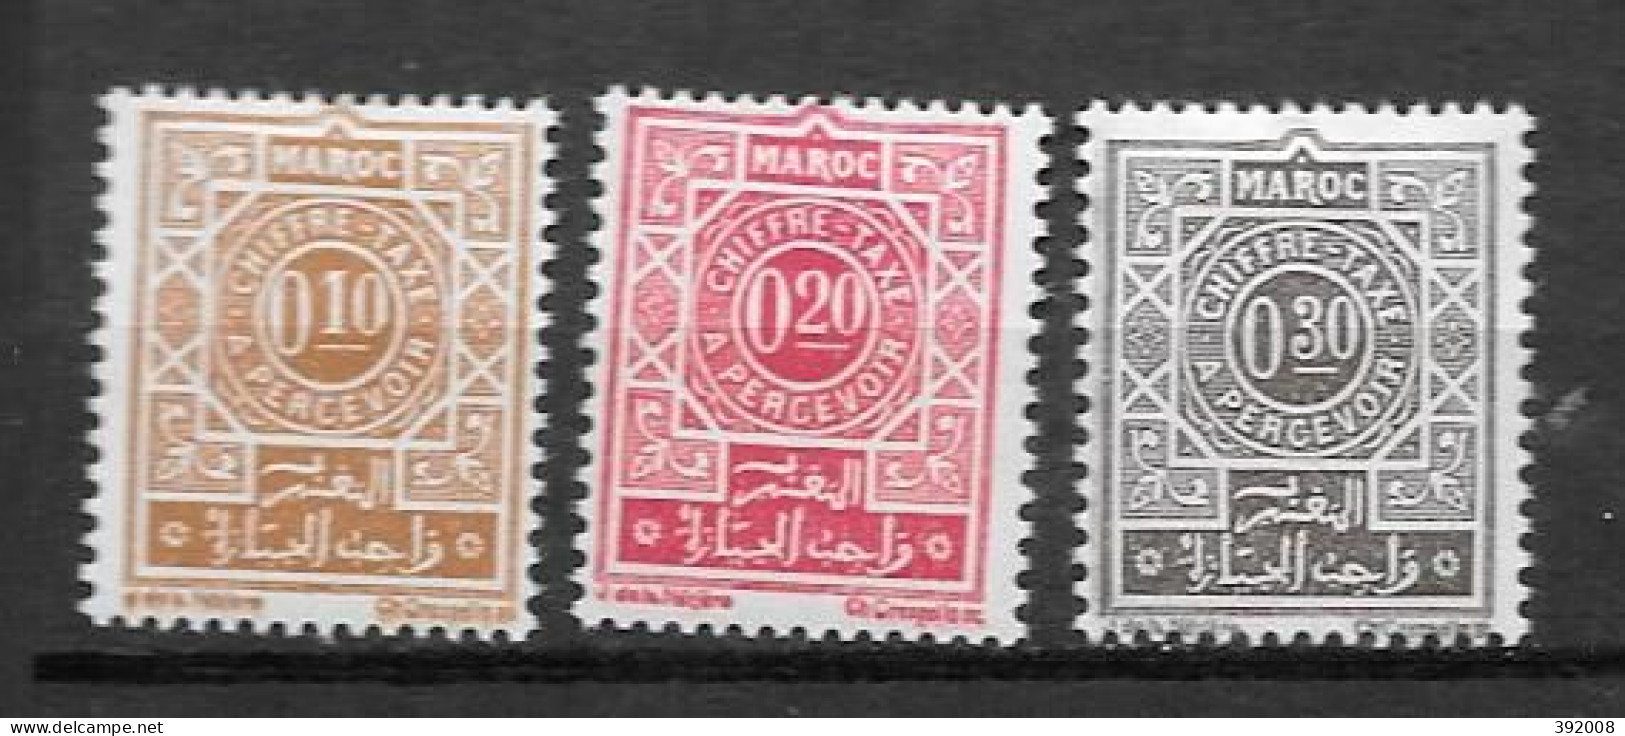 TAXE- 1965 - N° 57 à 59* MH -  - Morocco (1956-...)